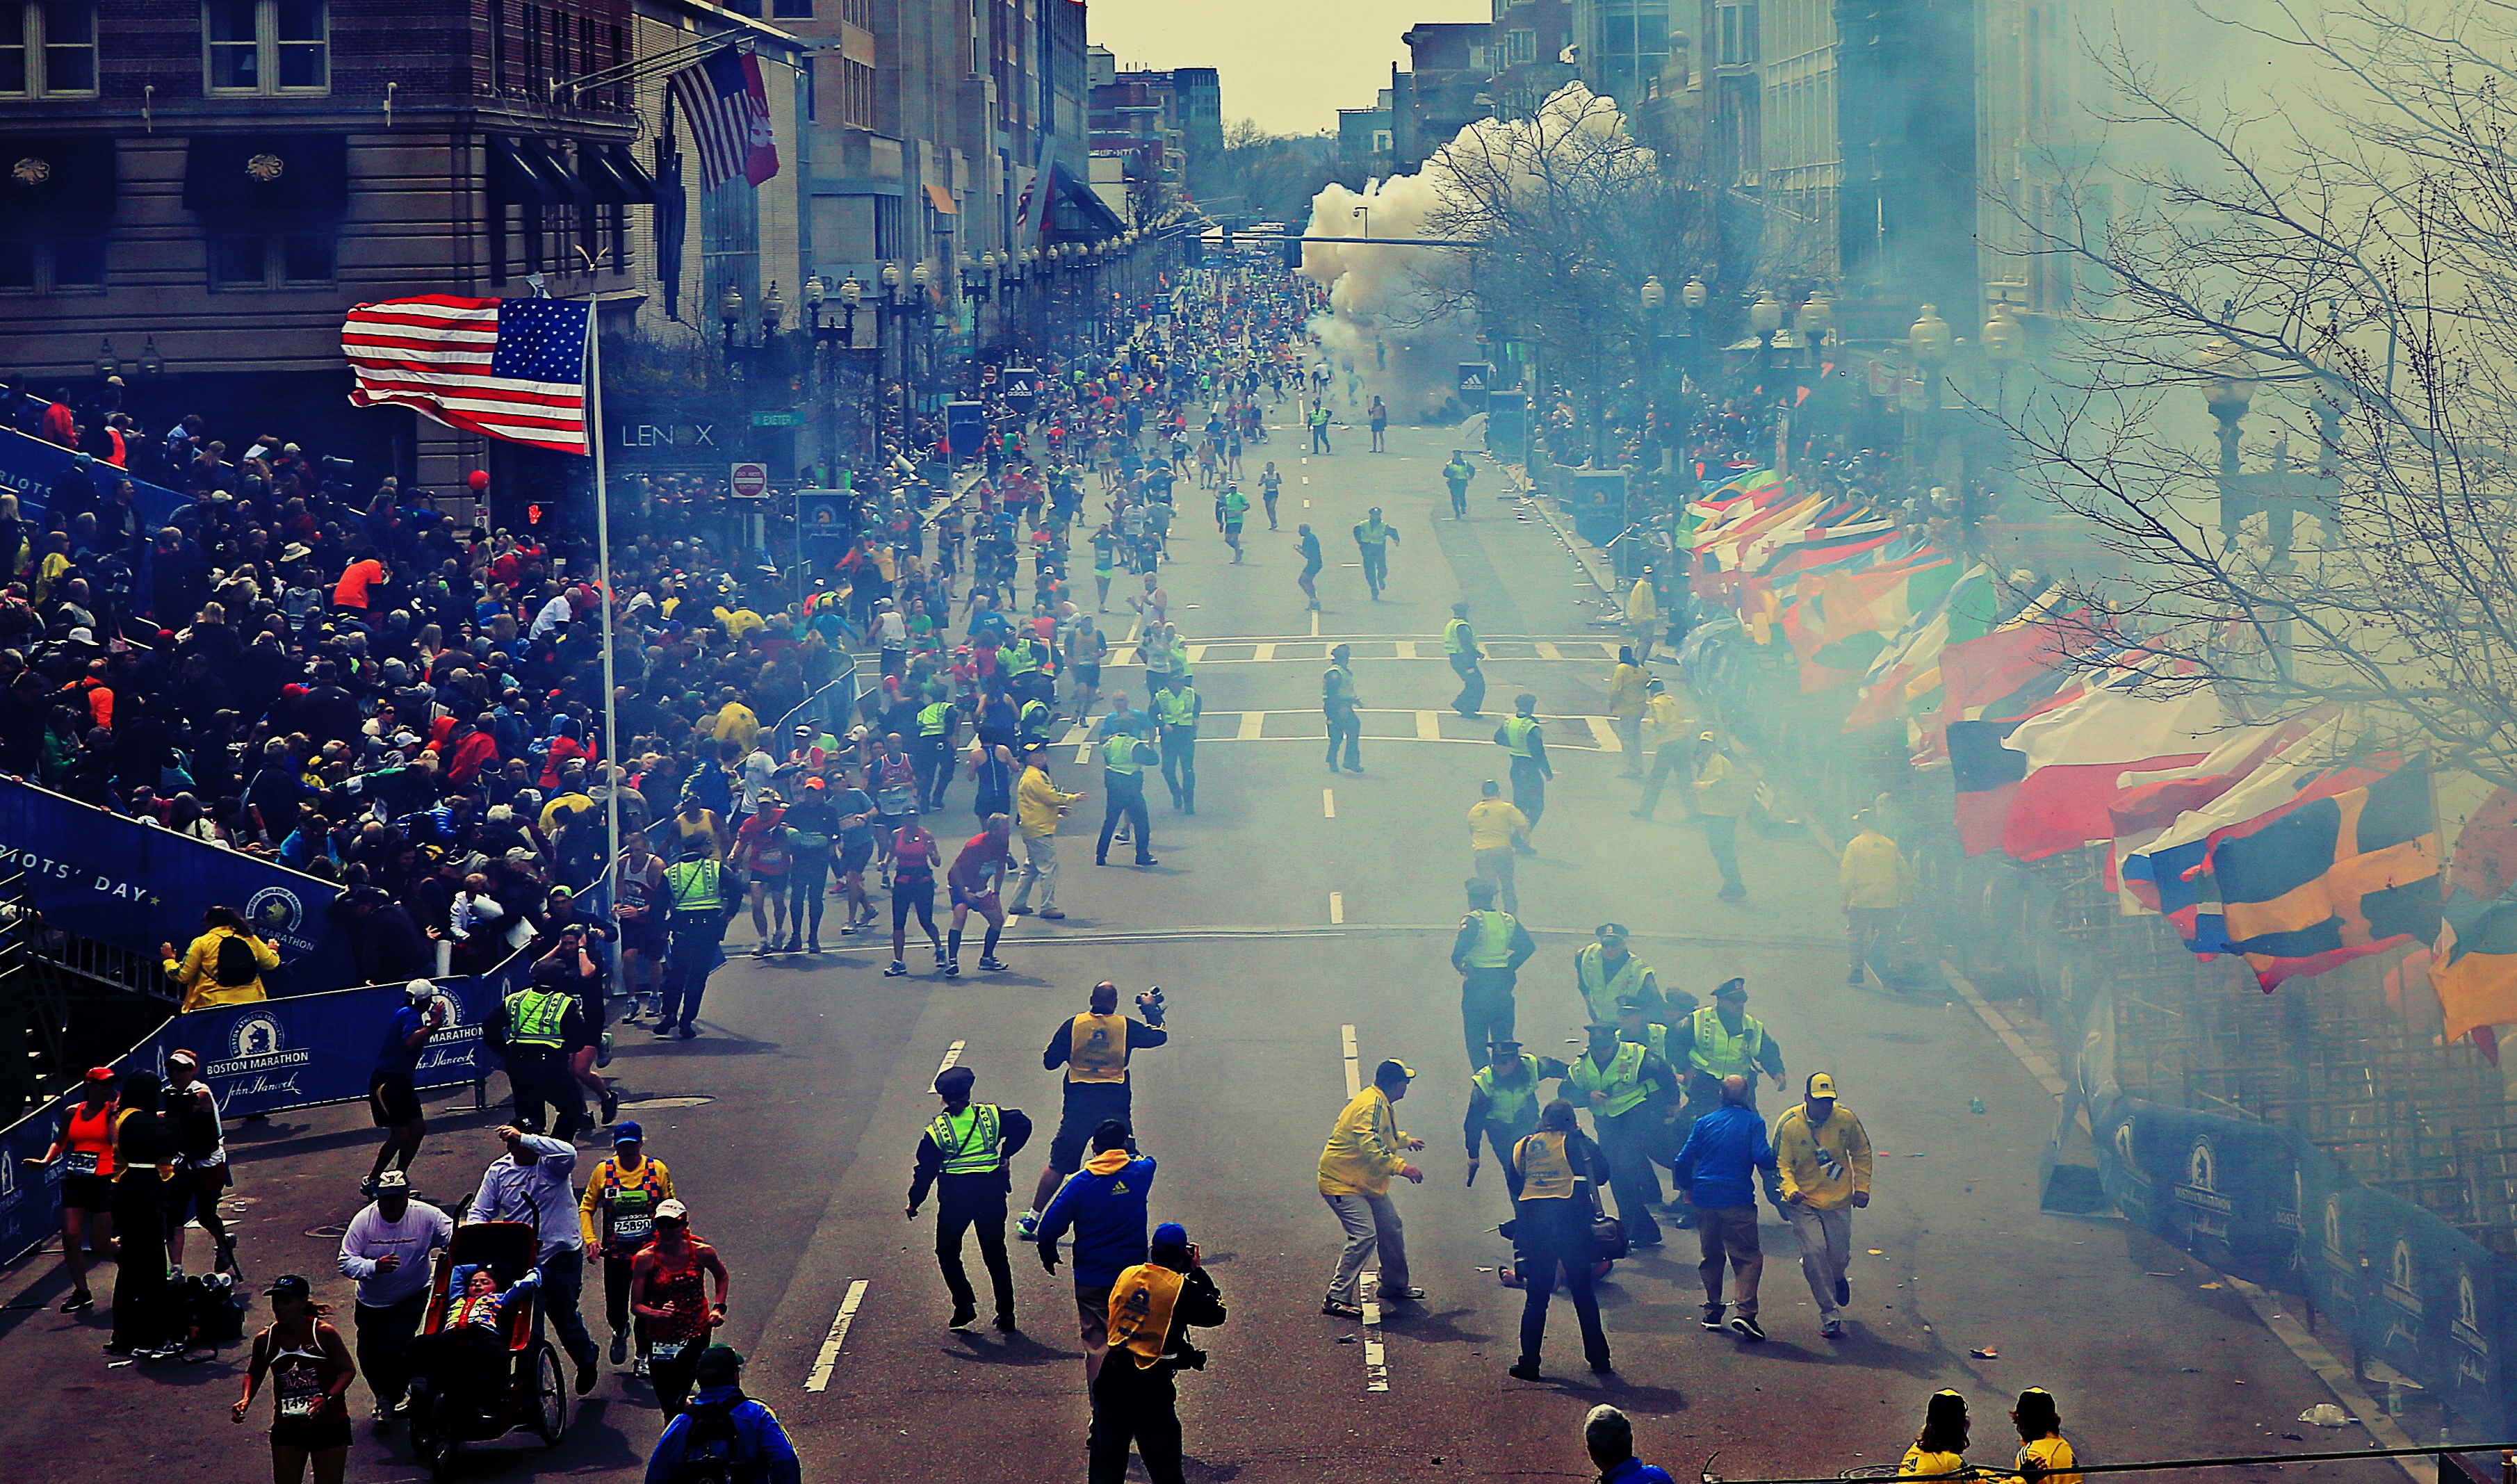 FILE - A plume of smoke rises from an explosion near the finish line of the 2013 Boston Marathon in Boston on Monday, April 15, 2013. (AP Photo/The Boston Globe, David L Ryan) MANDATORY CREDIT: THE BOSTON GLOBE, DAVID L RYAN